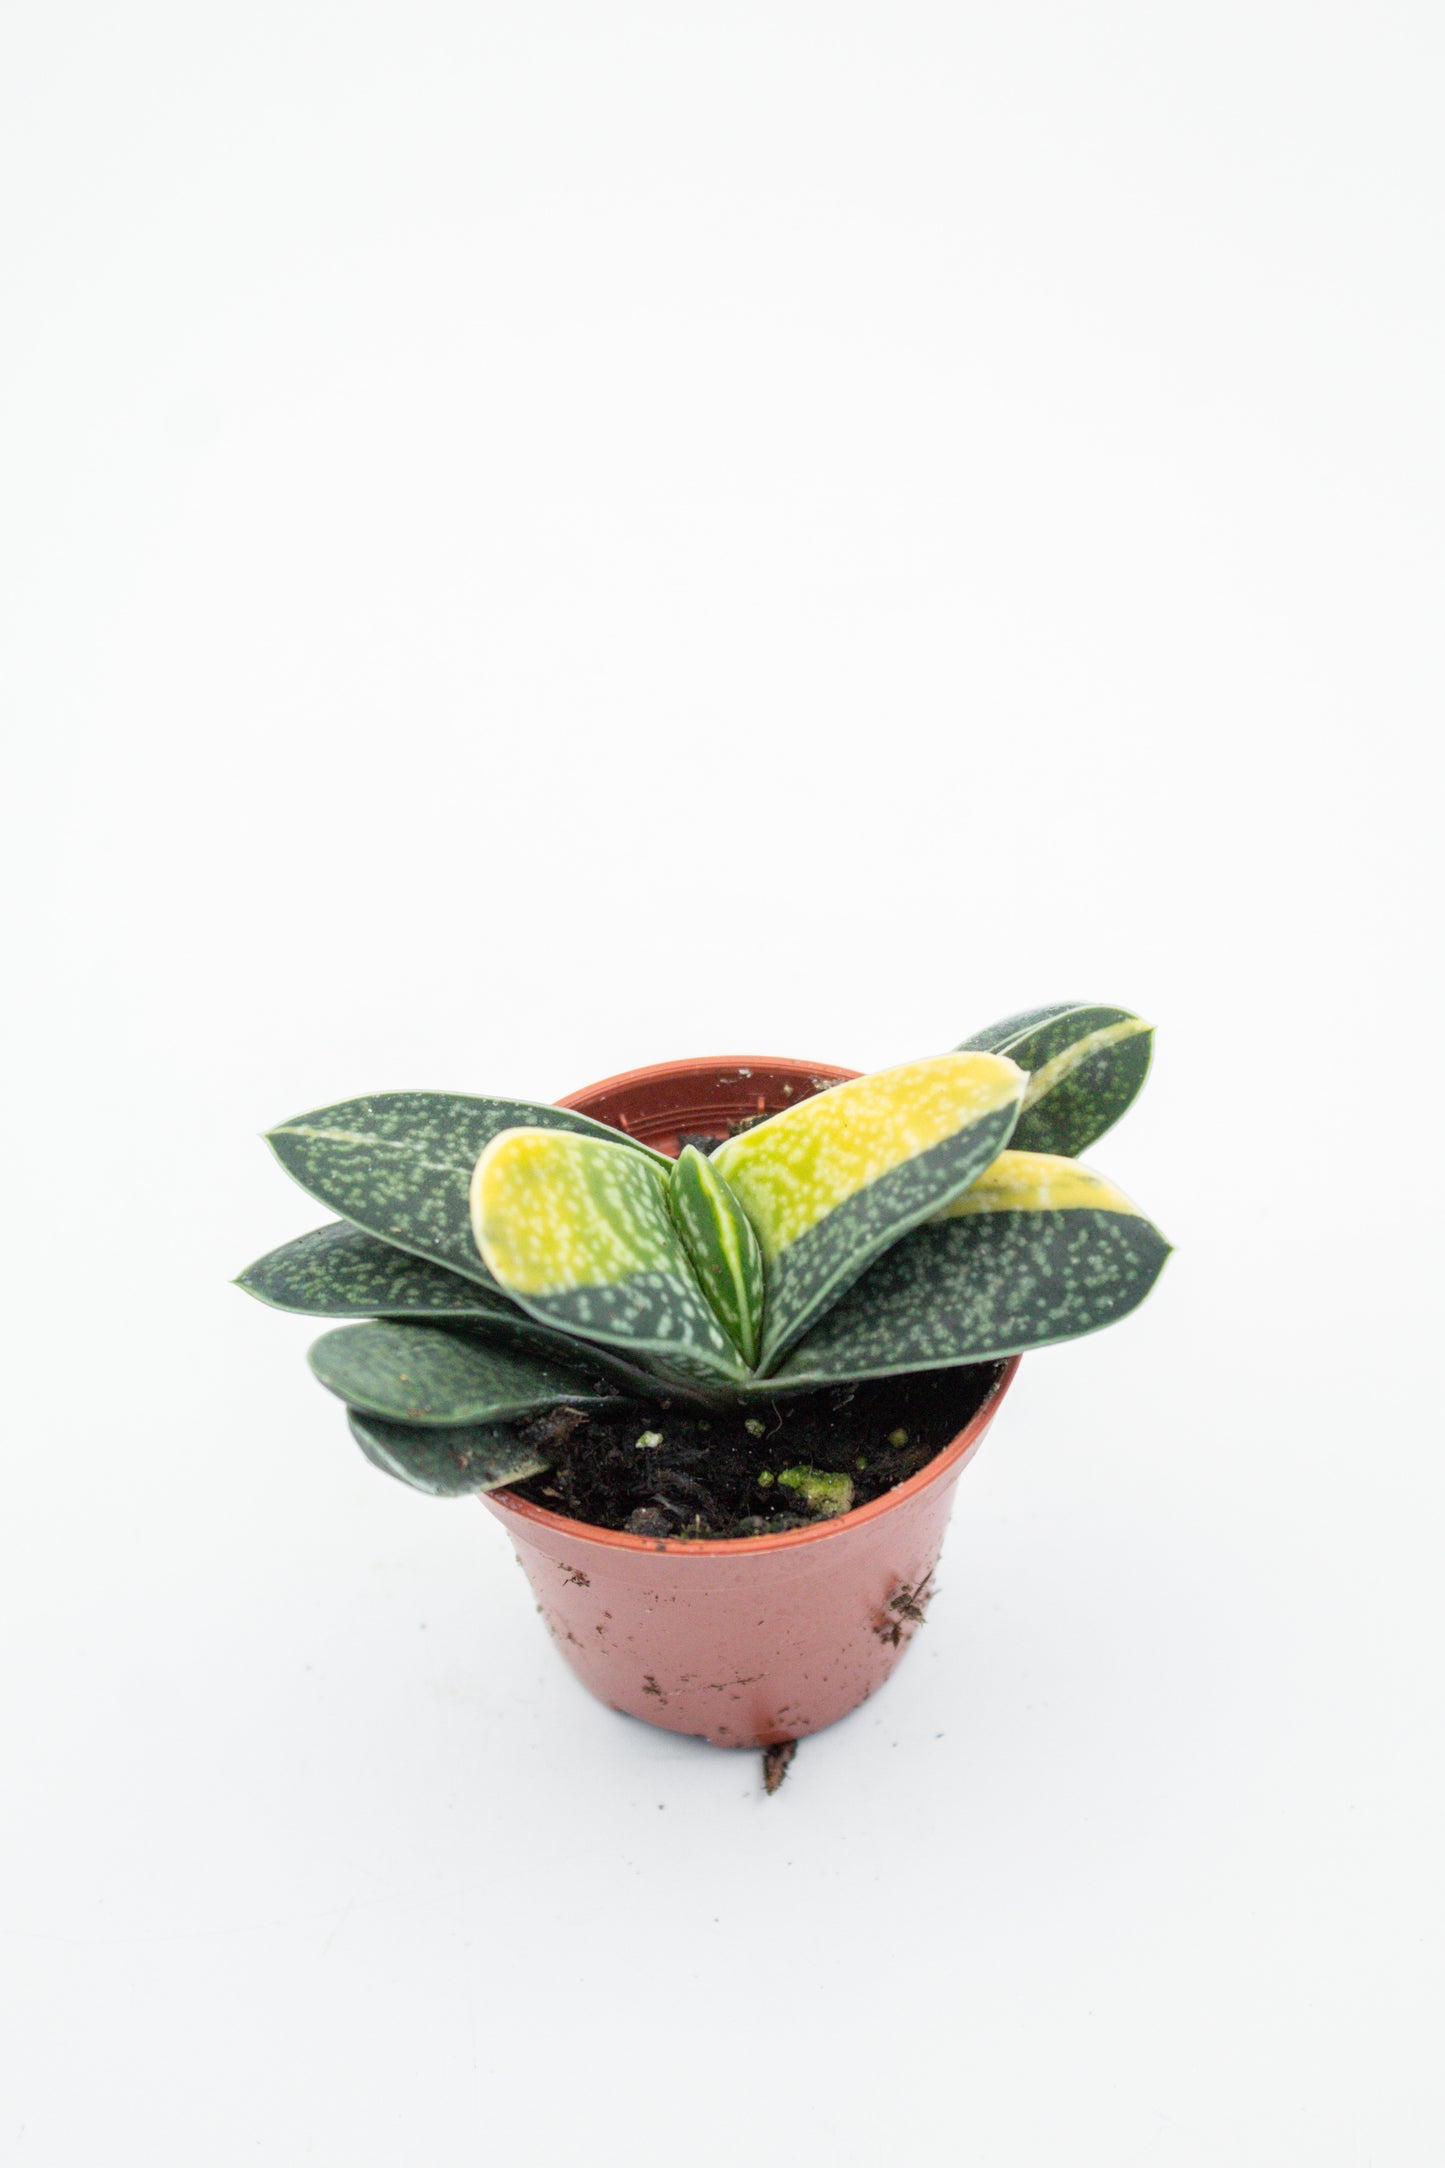 Gasteria gracilis cv. Variegata Yellow